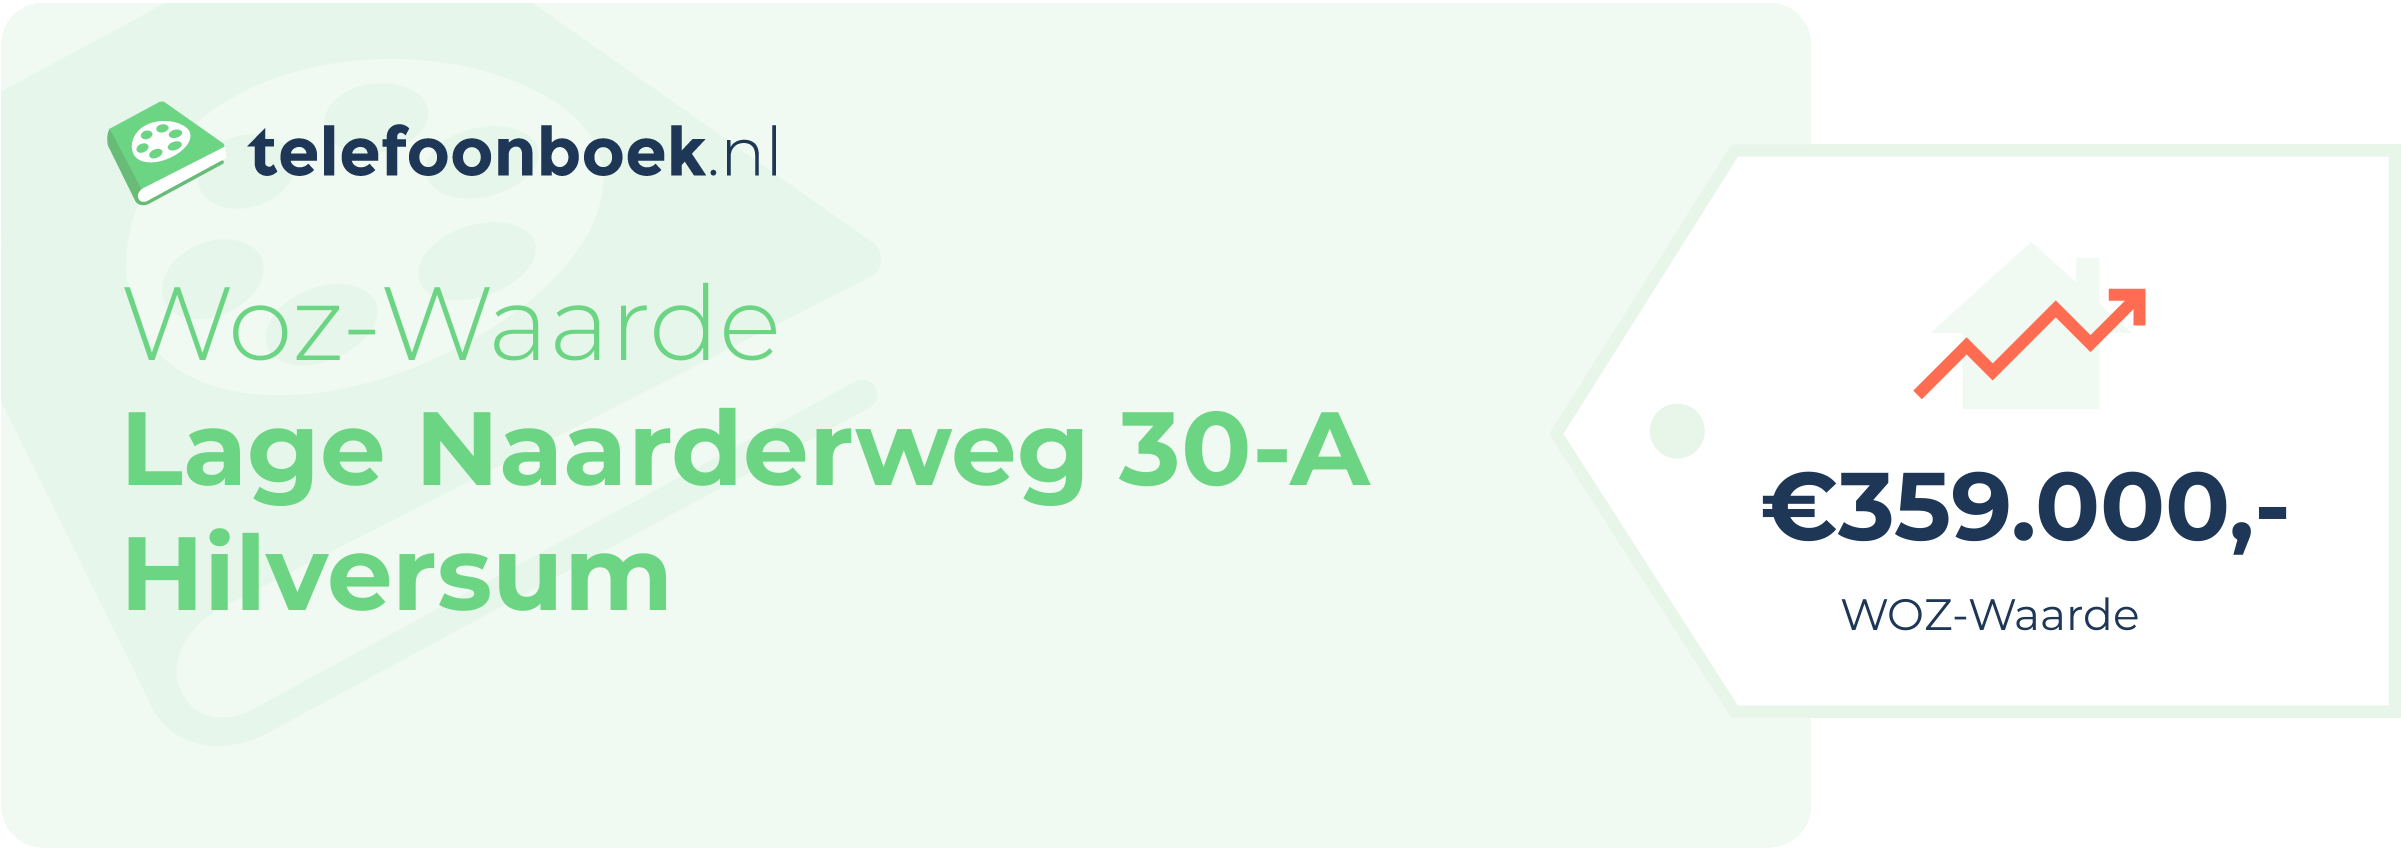 WOZ-waarde Lage Naarderweg 30-A Hilversum